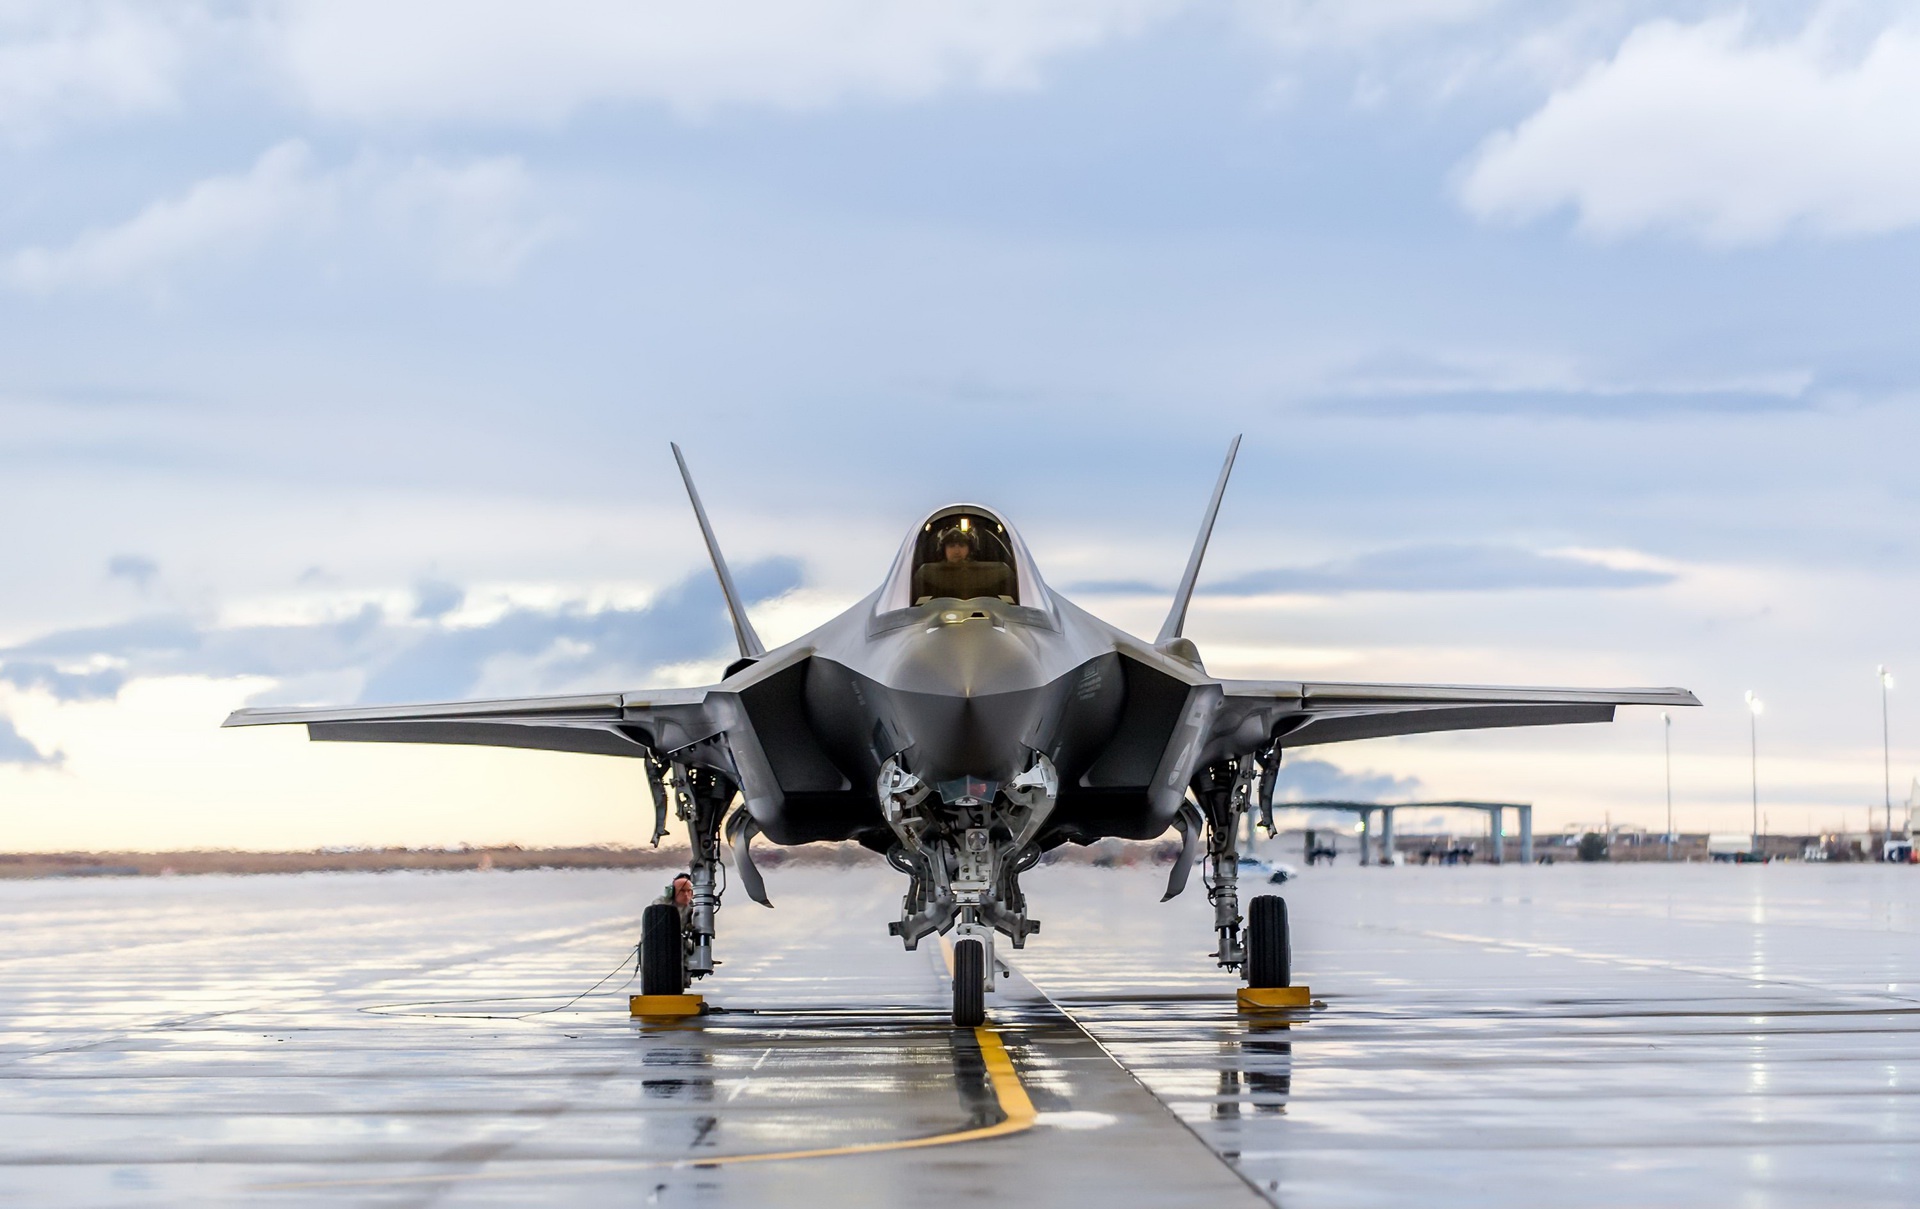 lockheed martin f 35 lightning ii, jet fighter, military, aircraft, warplane, jet fighters